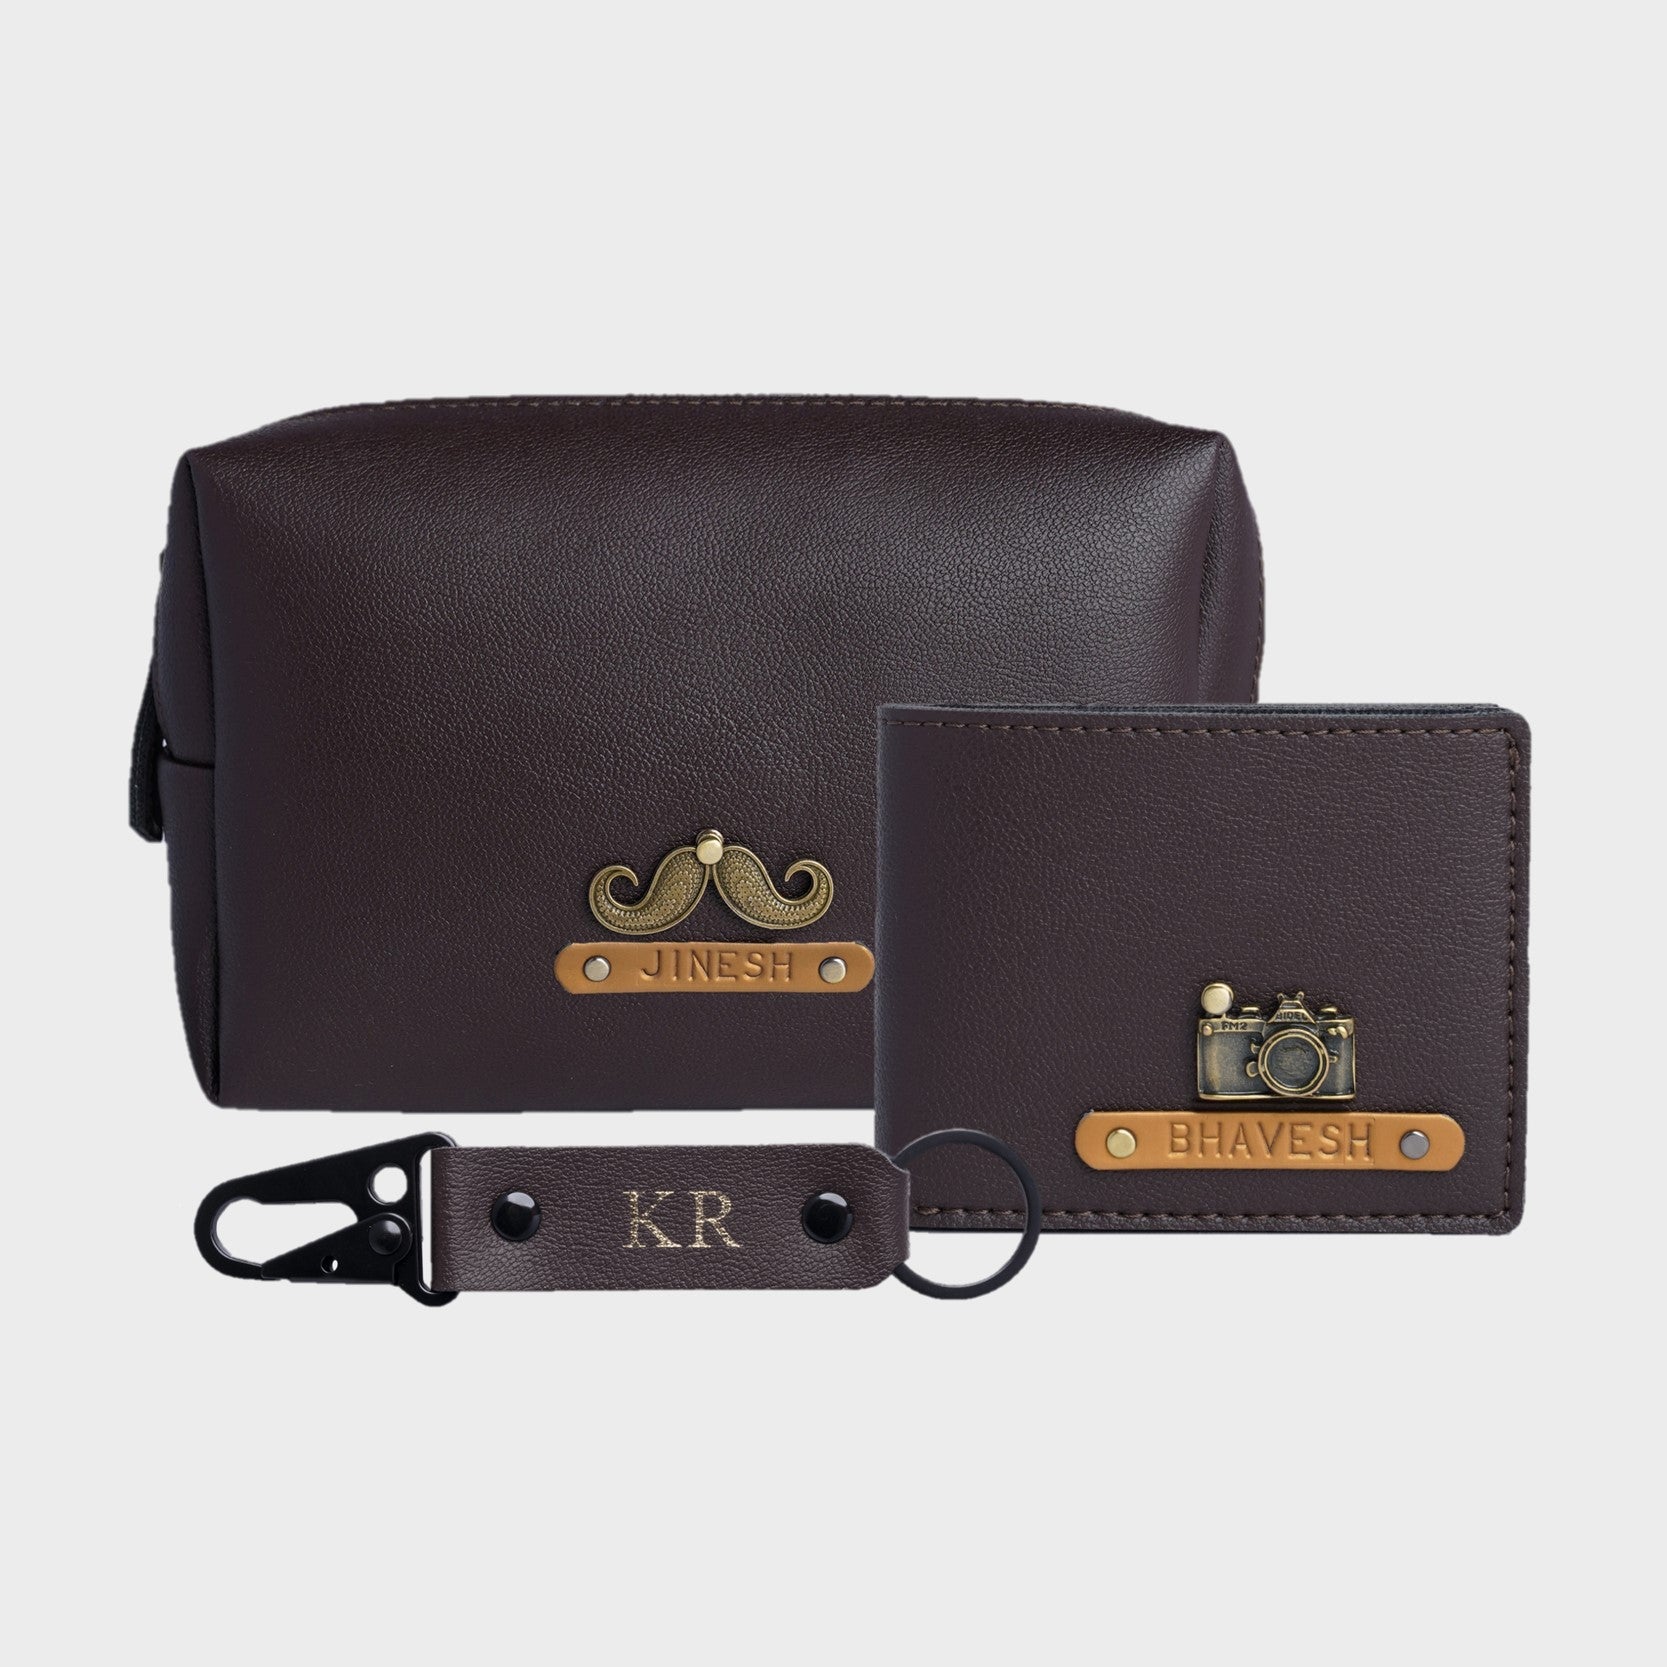 Buy Custom Mens Wallet,Bifold Brown Leather Wallet,Personalised Rustic  Vintage Look Wallet, made to order from GoodDadShop | CustomMade.com